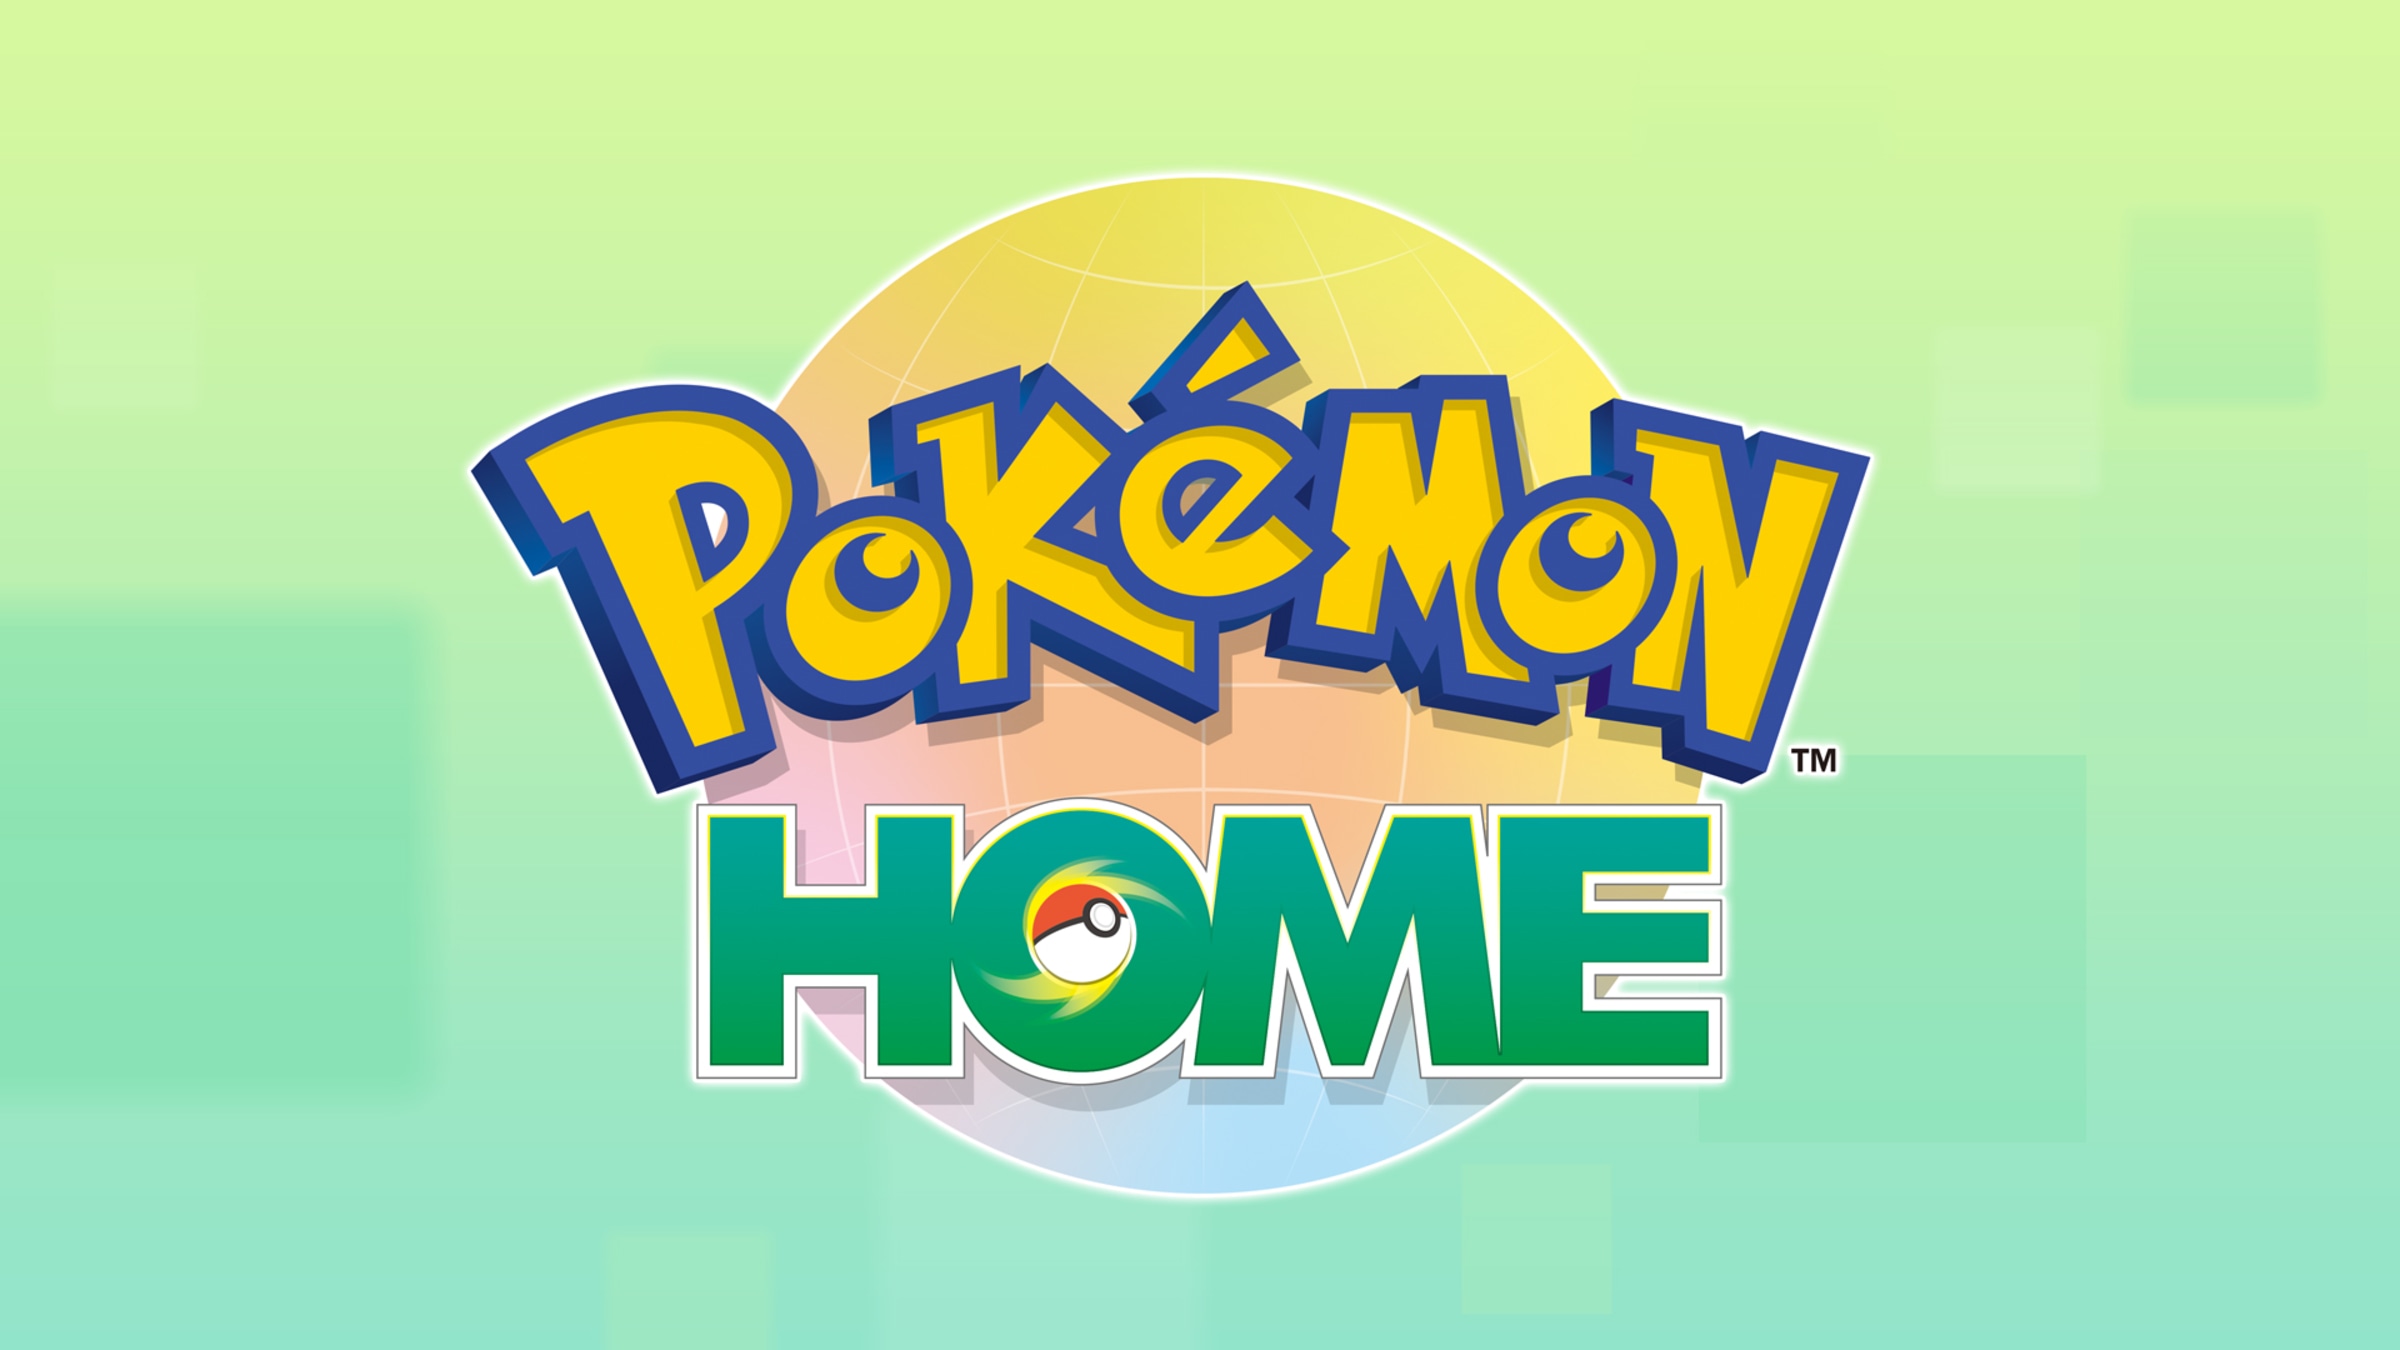 Pokémon™ Brilliant Diamond for Nintendo Switch - Nintendo Official